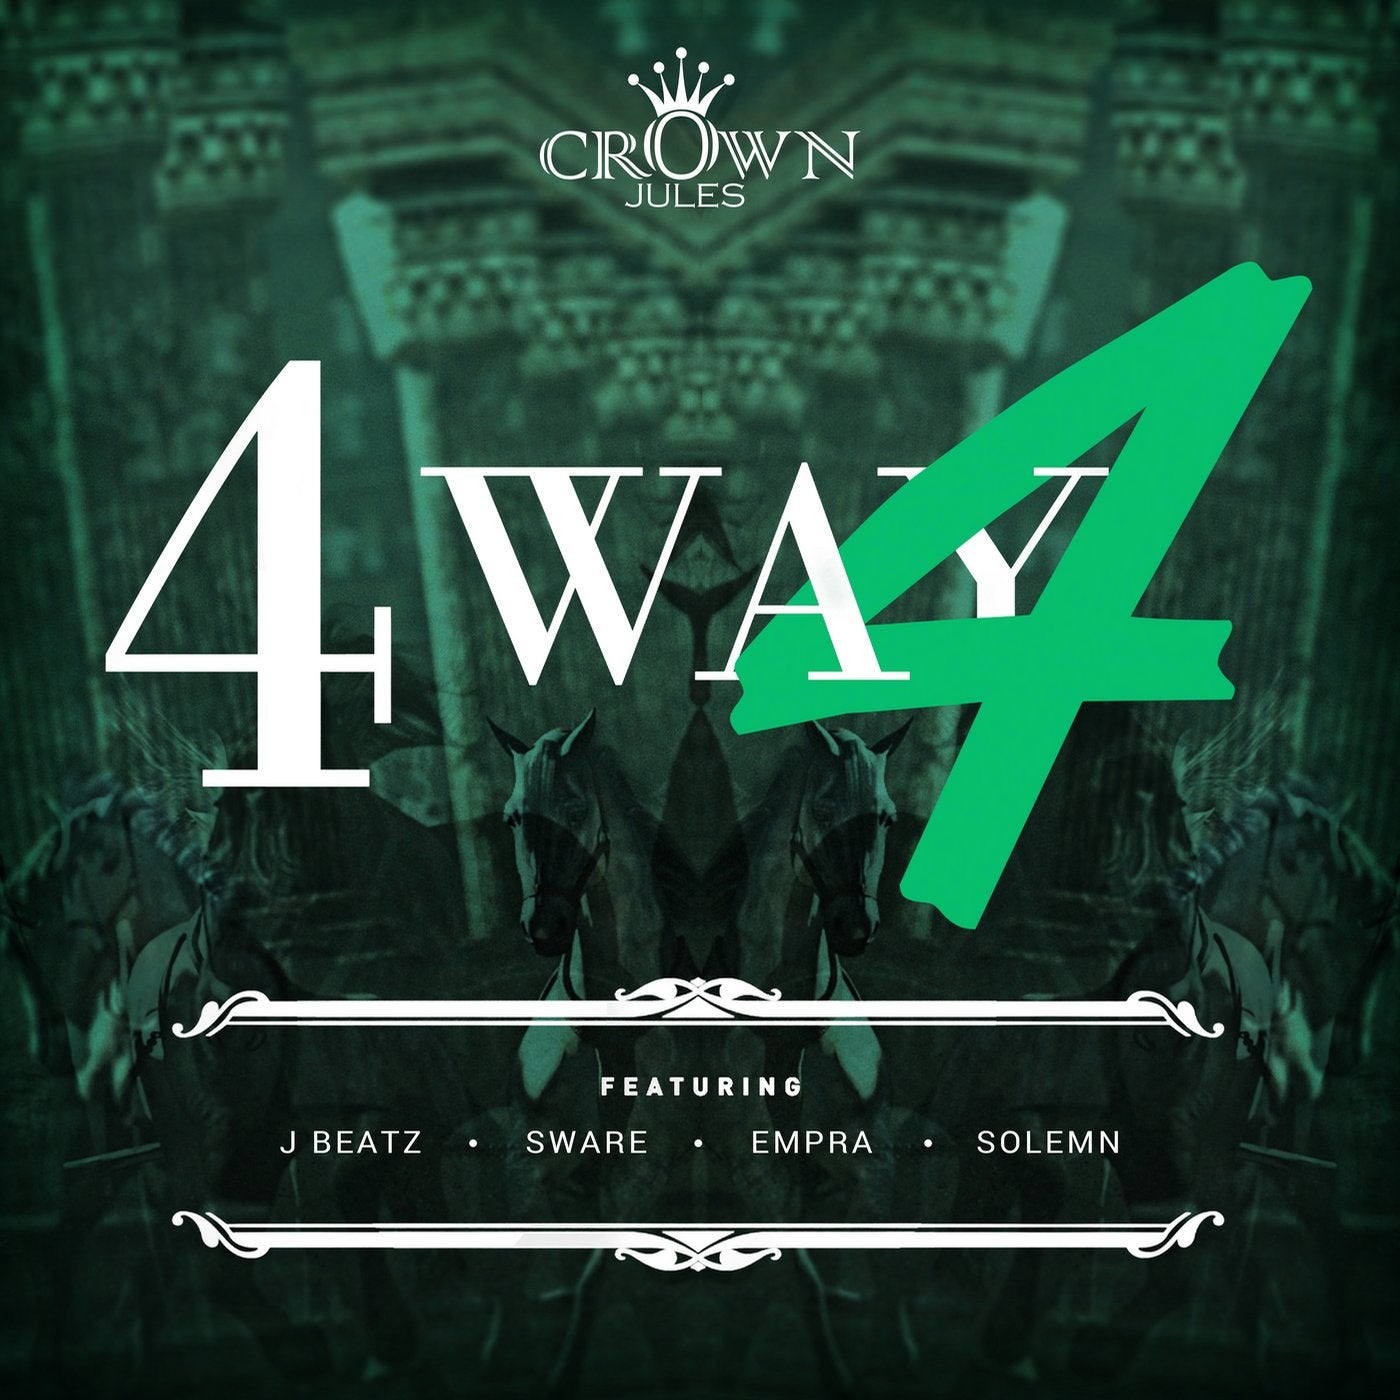 4 Way 4 EP